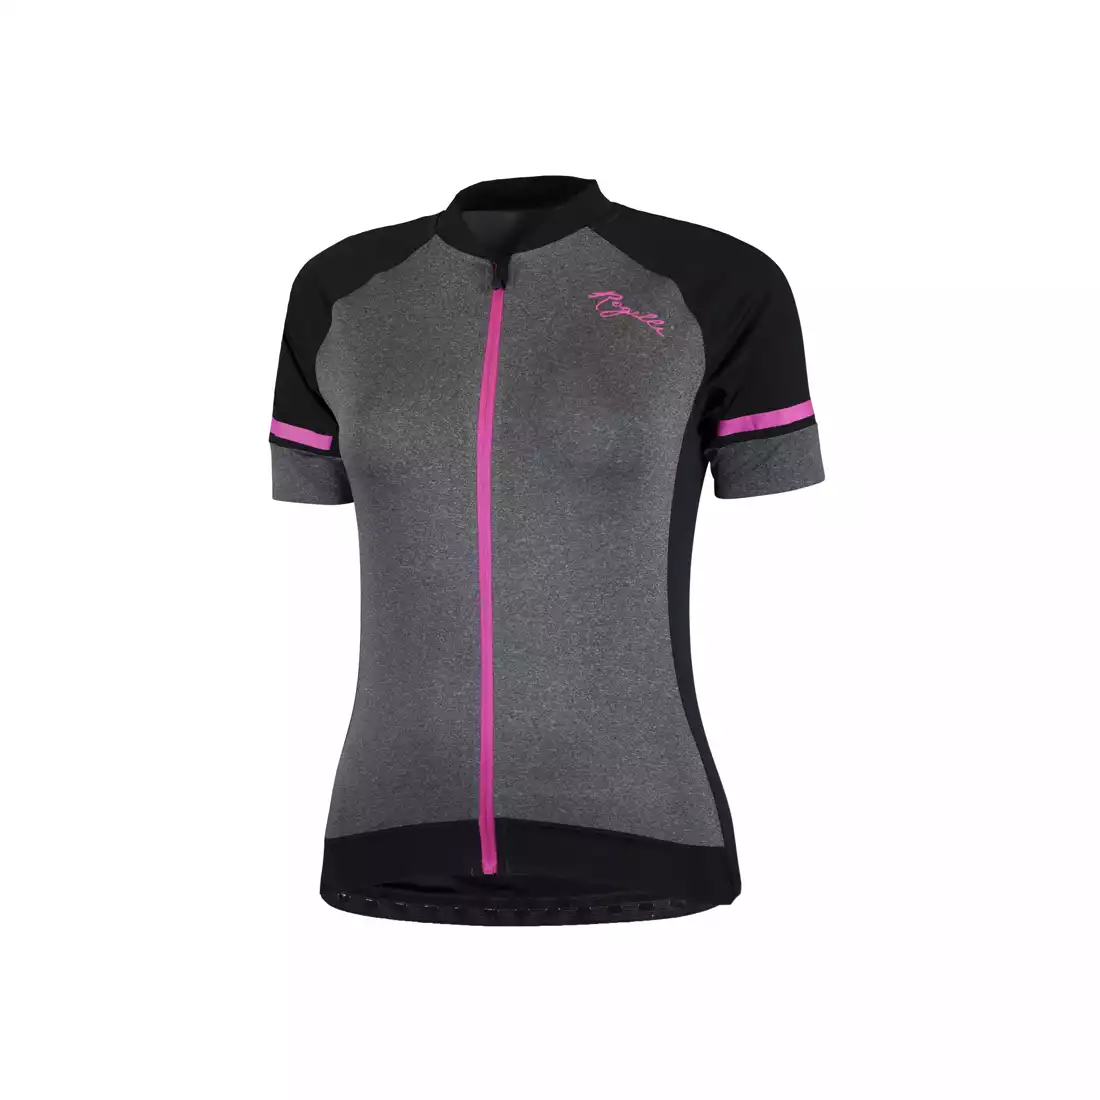 ROGELLI CARLYN 2.0 damska koszulka rowerowa, czarny-szary-róż 010.107